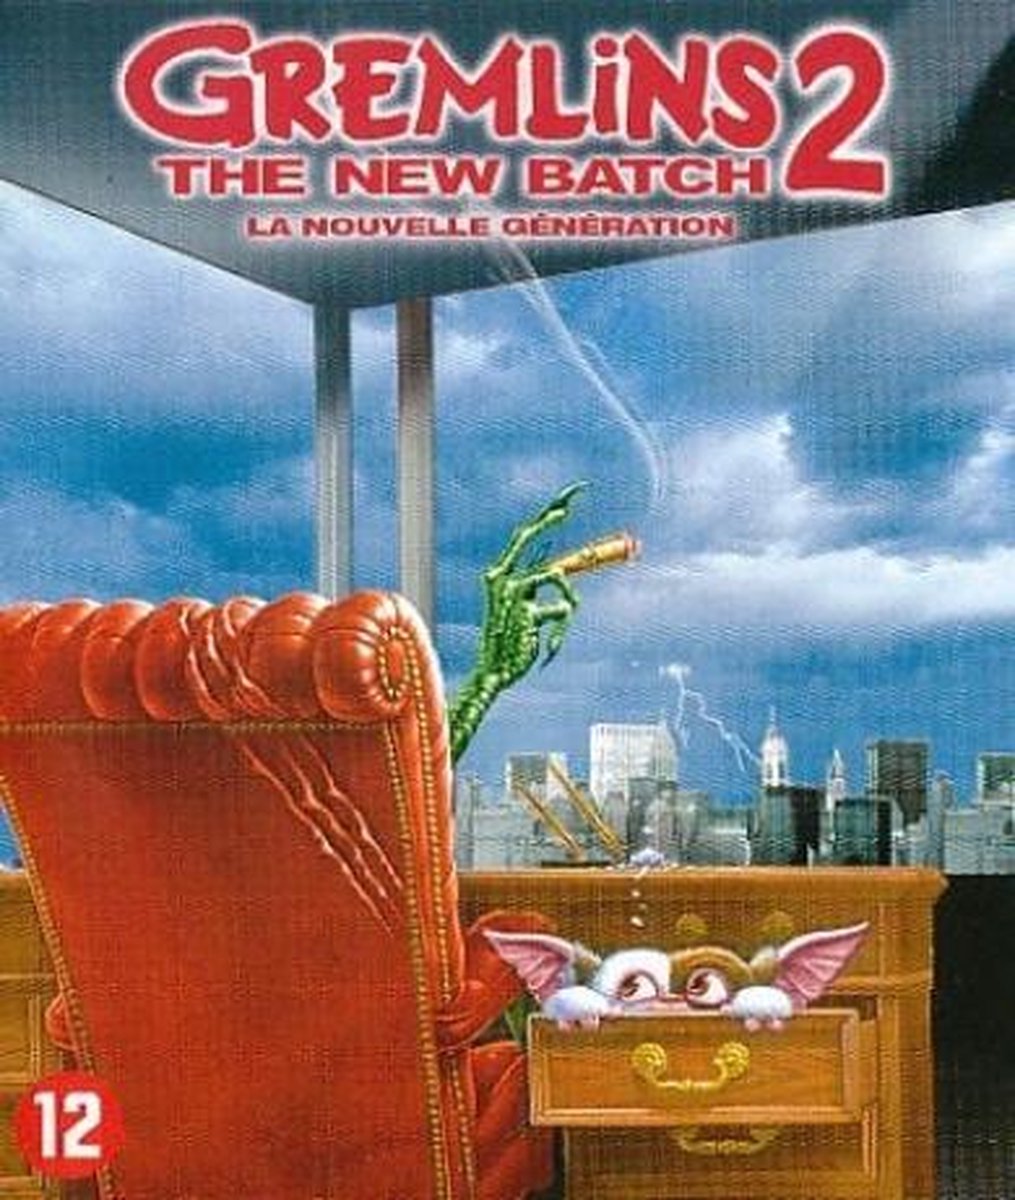 Gremlins 2 - The New Batch (Blu-ray)